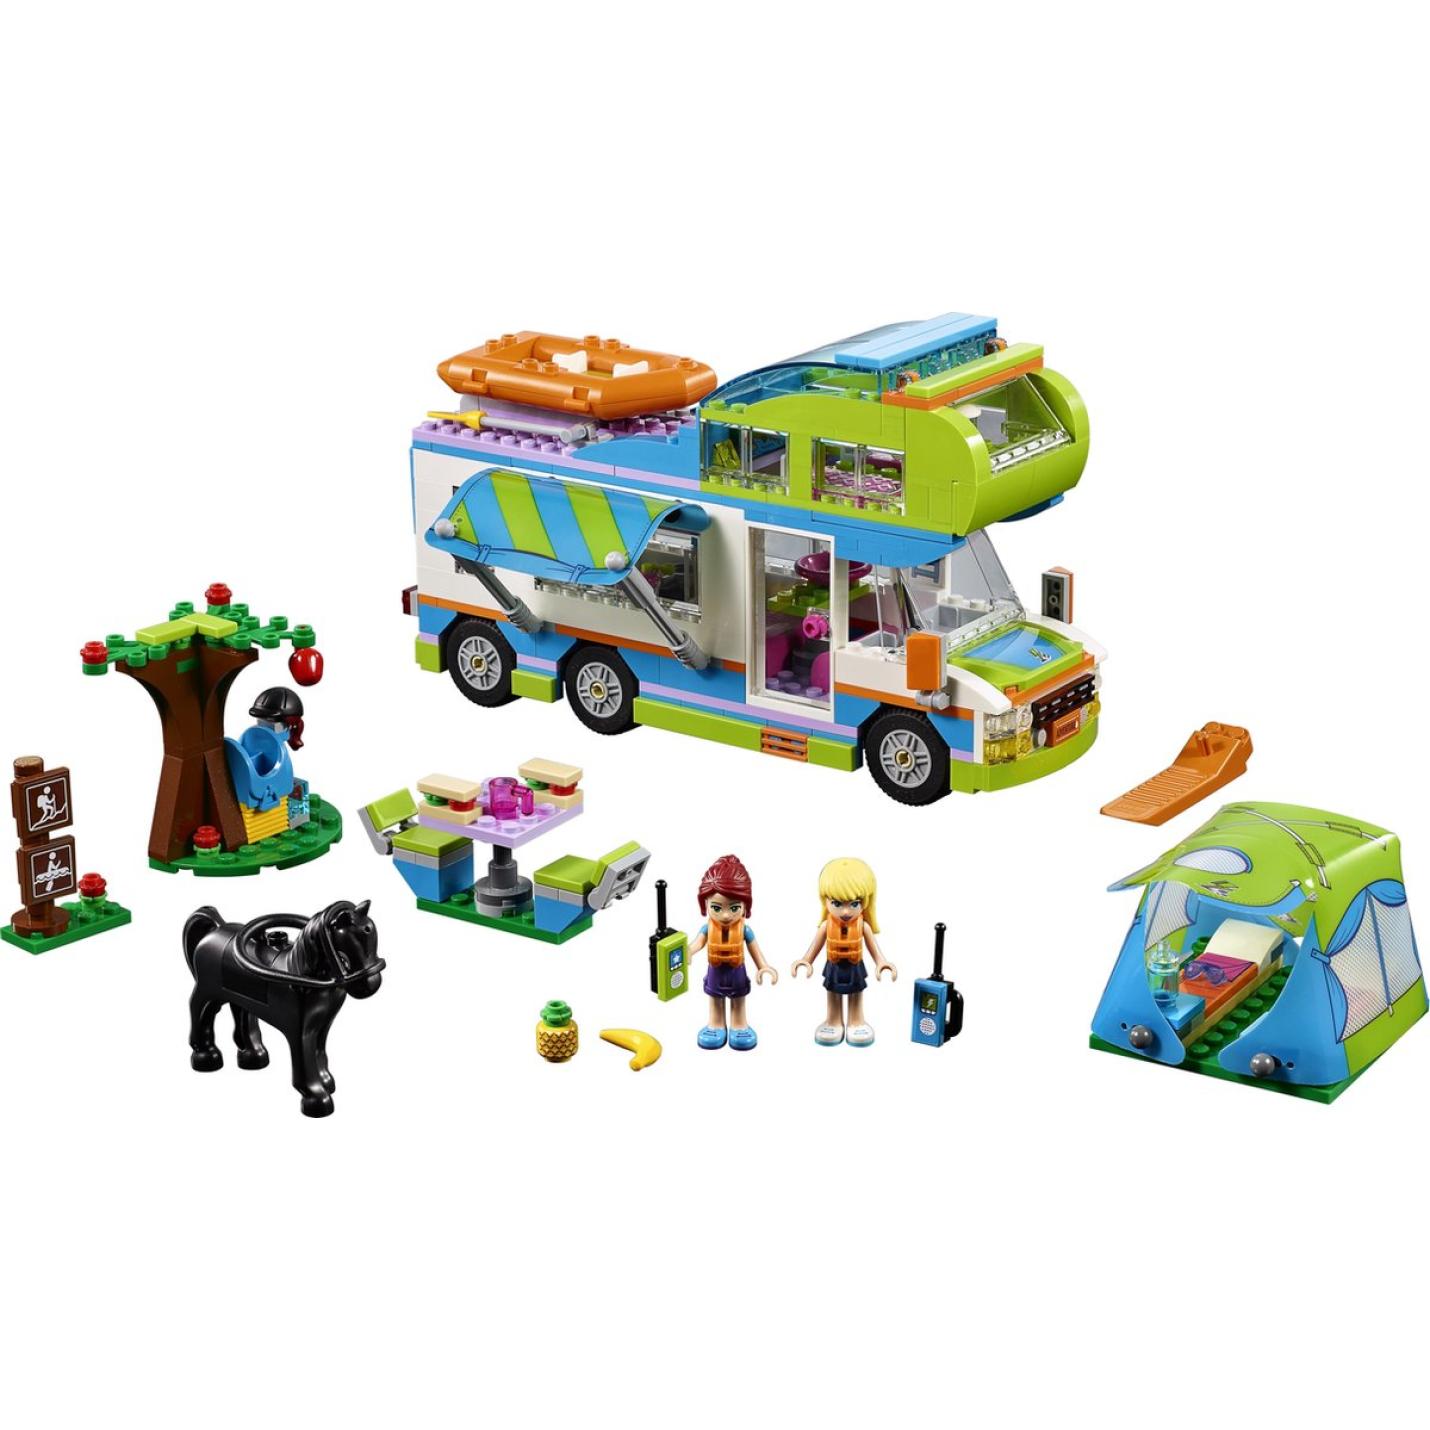 LEGO Friends Mia's Camper - 41339 3